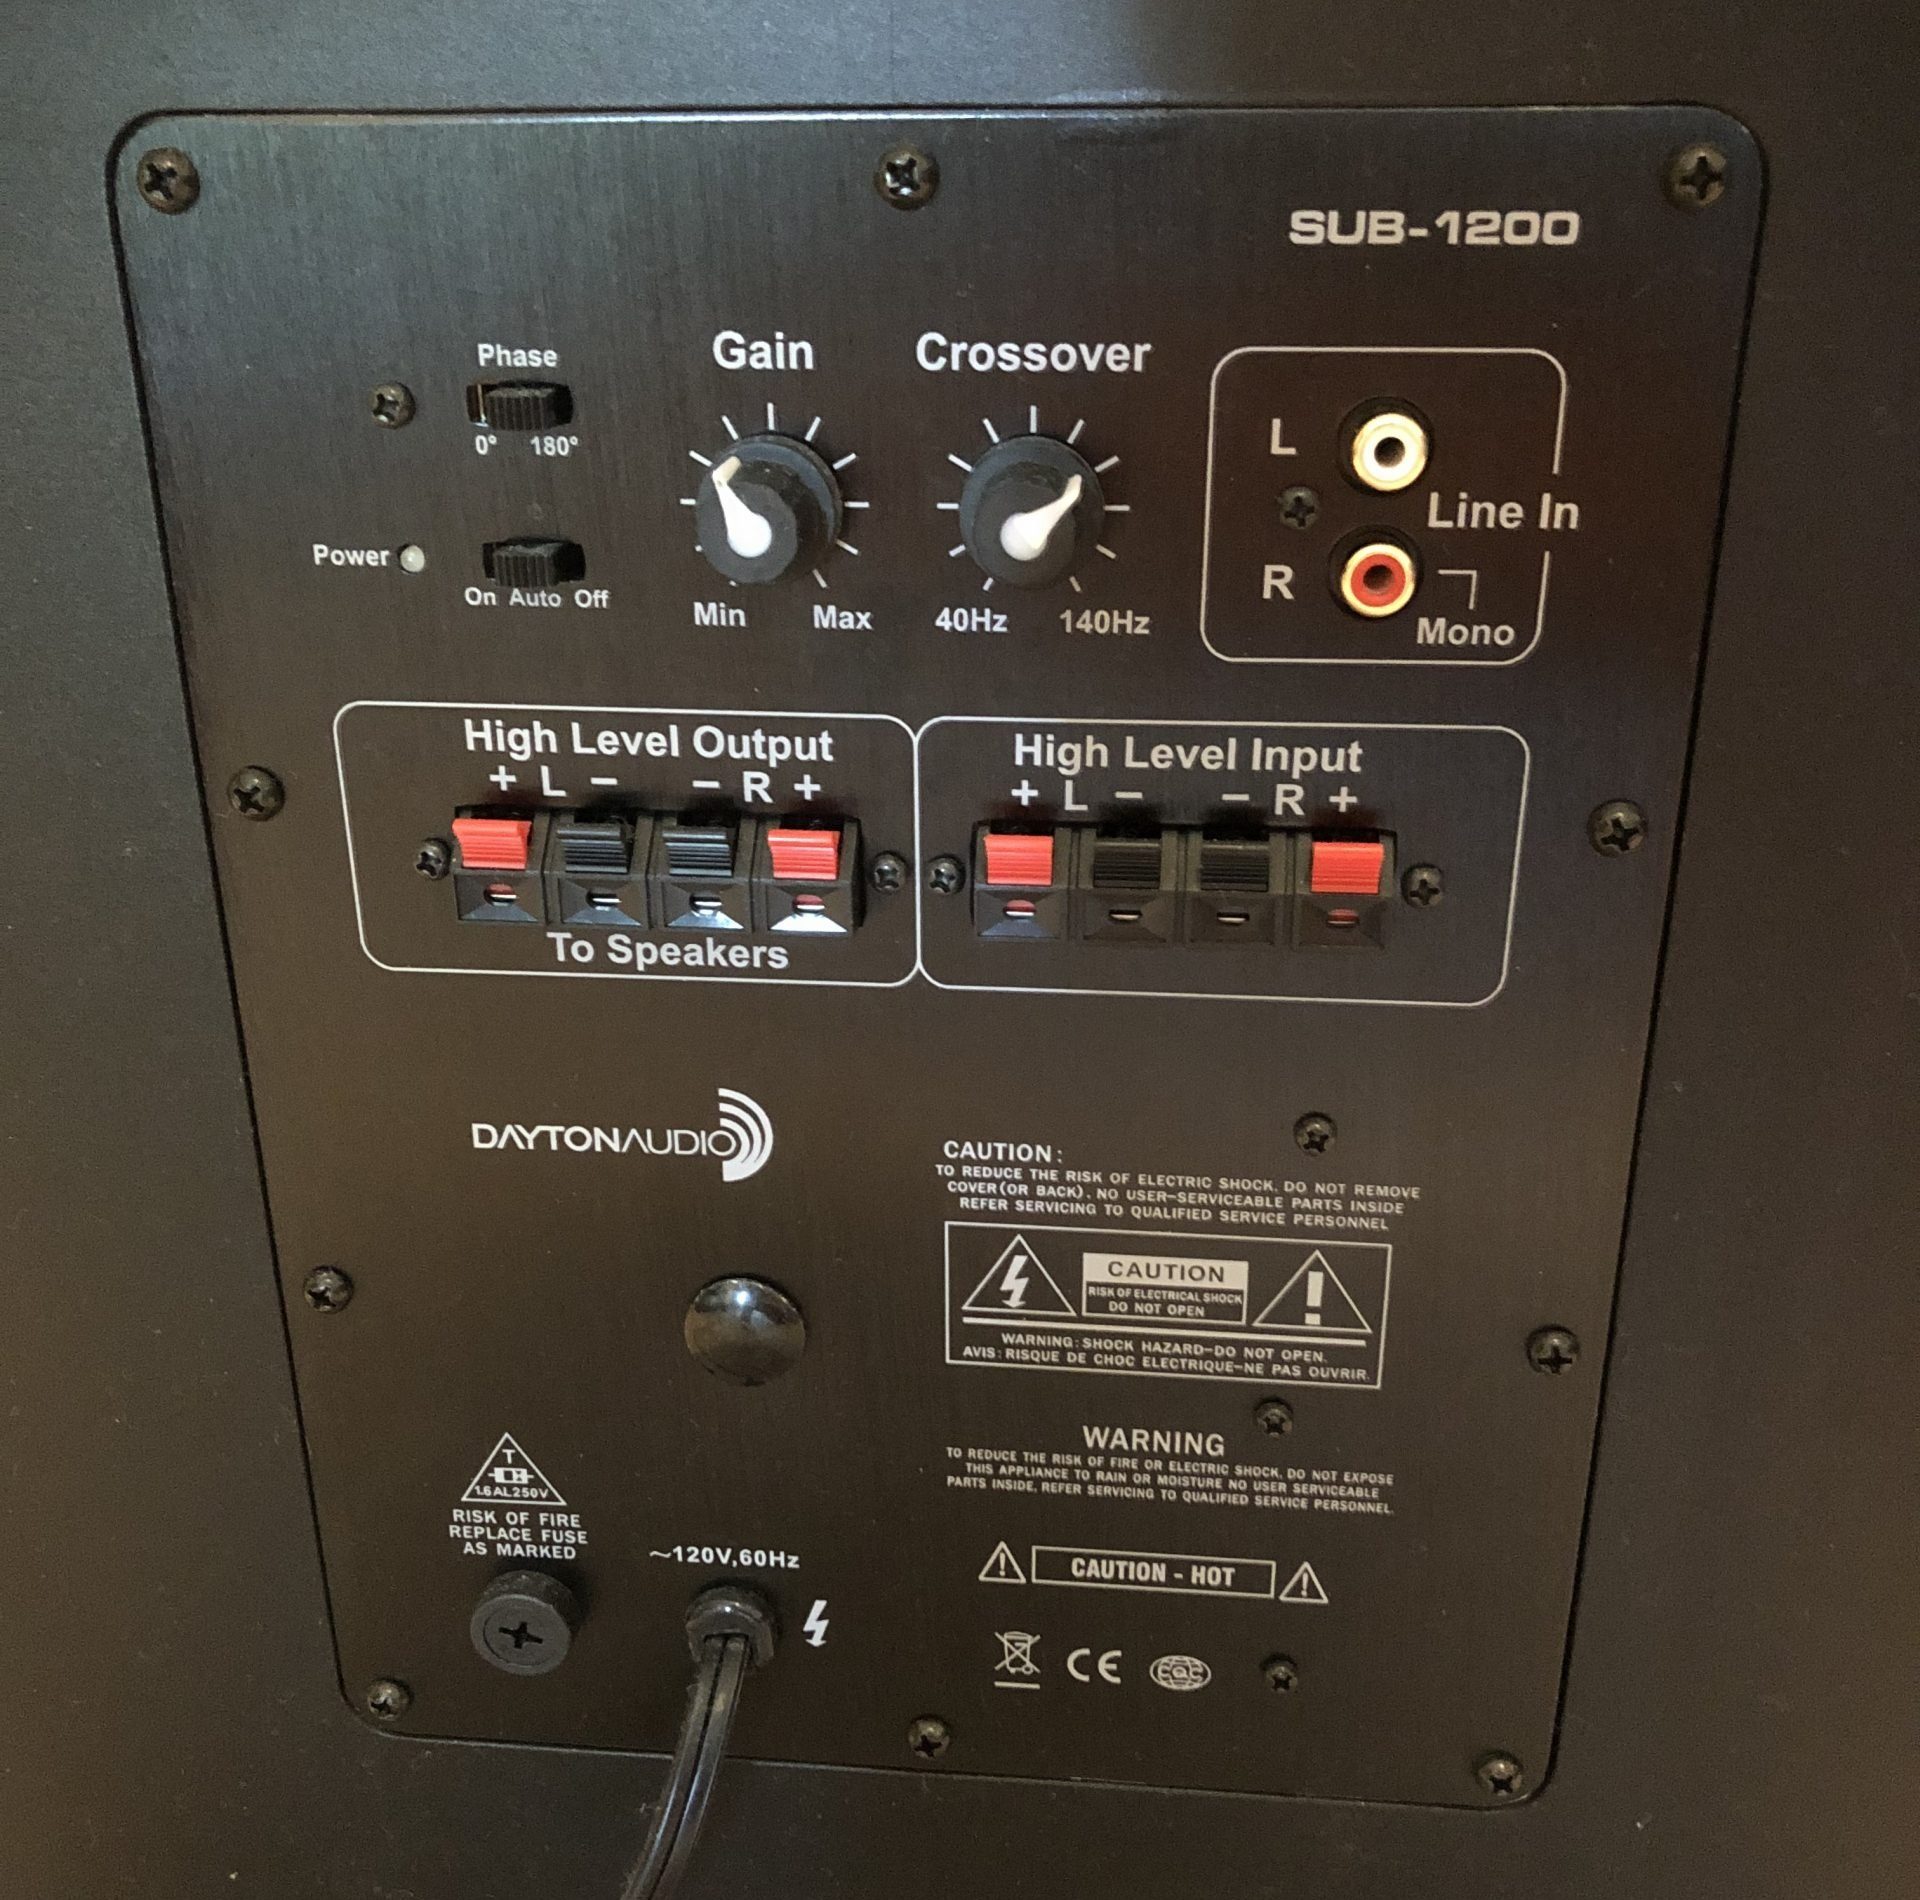 Dayton Audio Sub-1200 back control panel